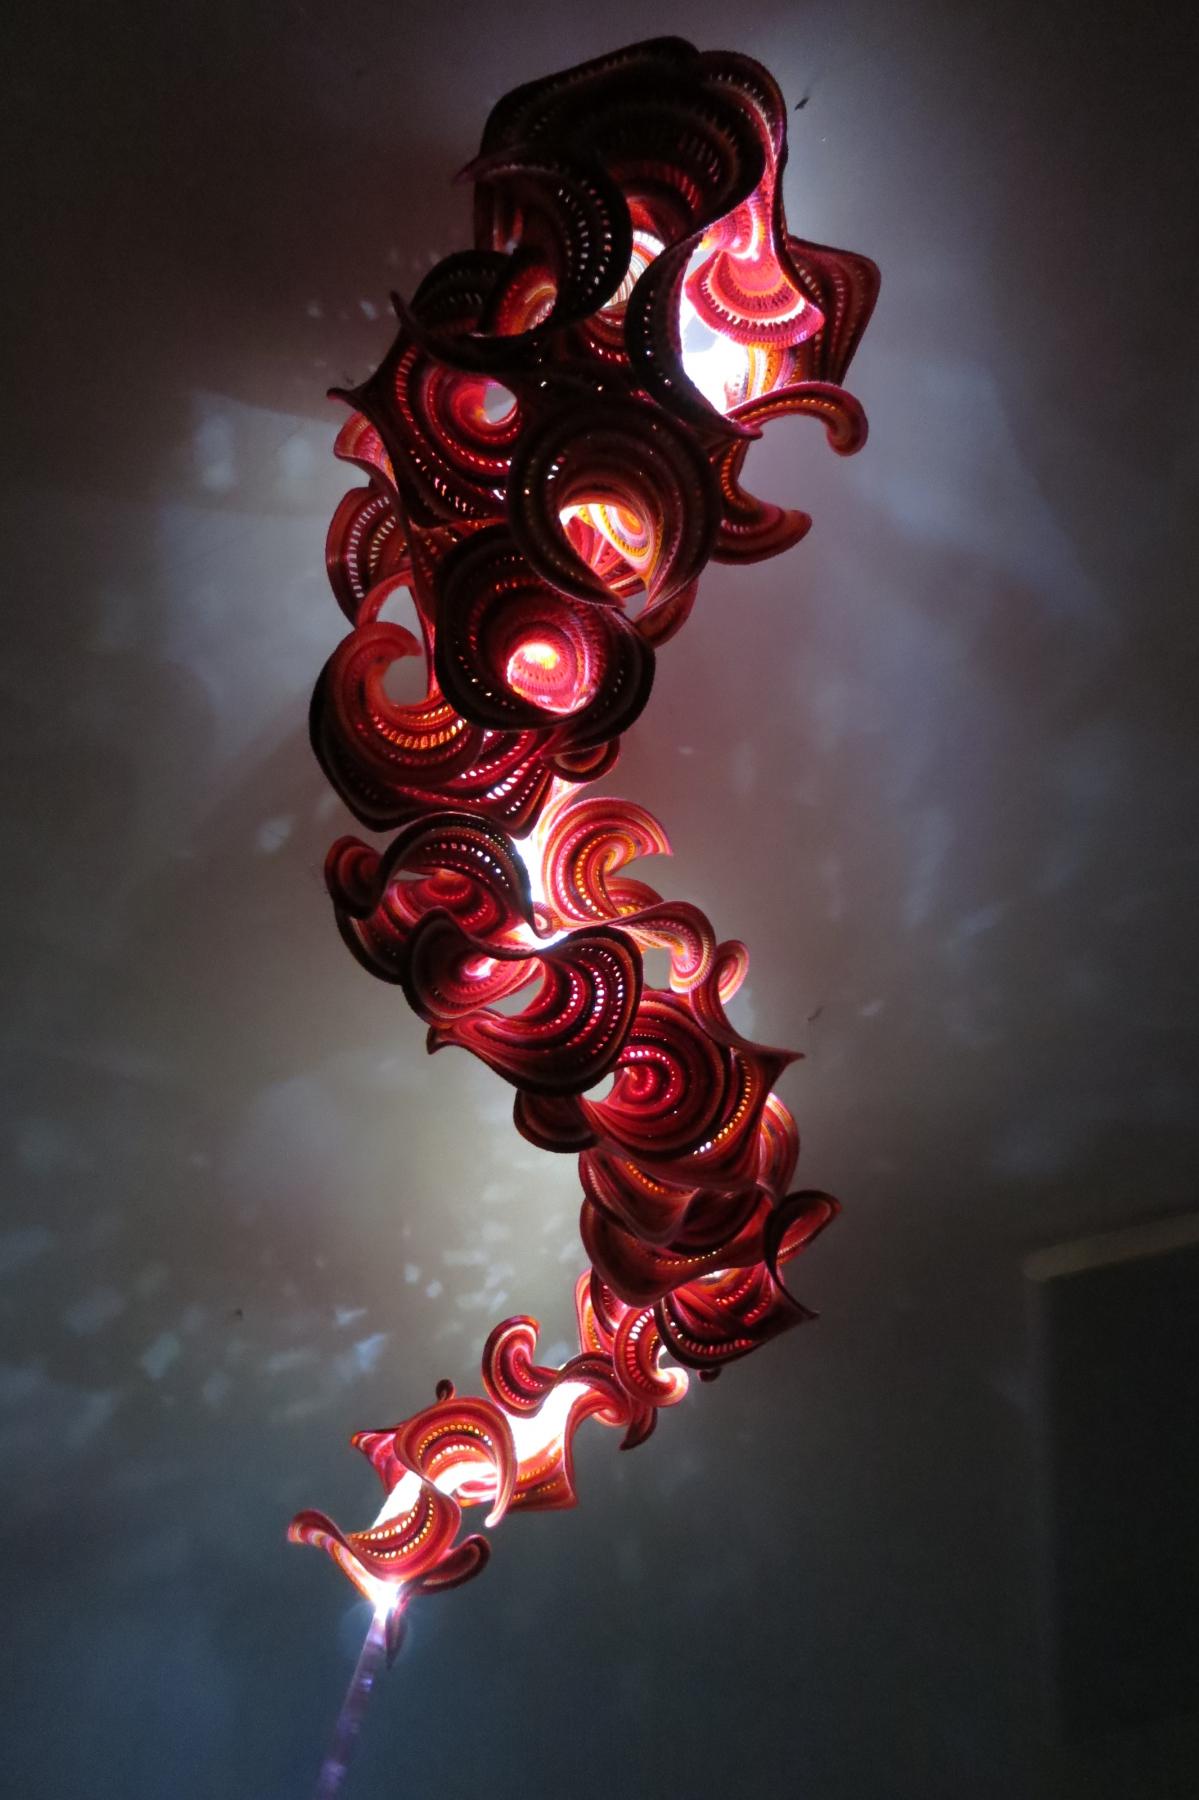 Image for entry 'flaring red algae, lamp'